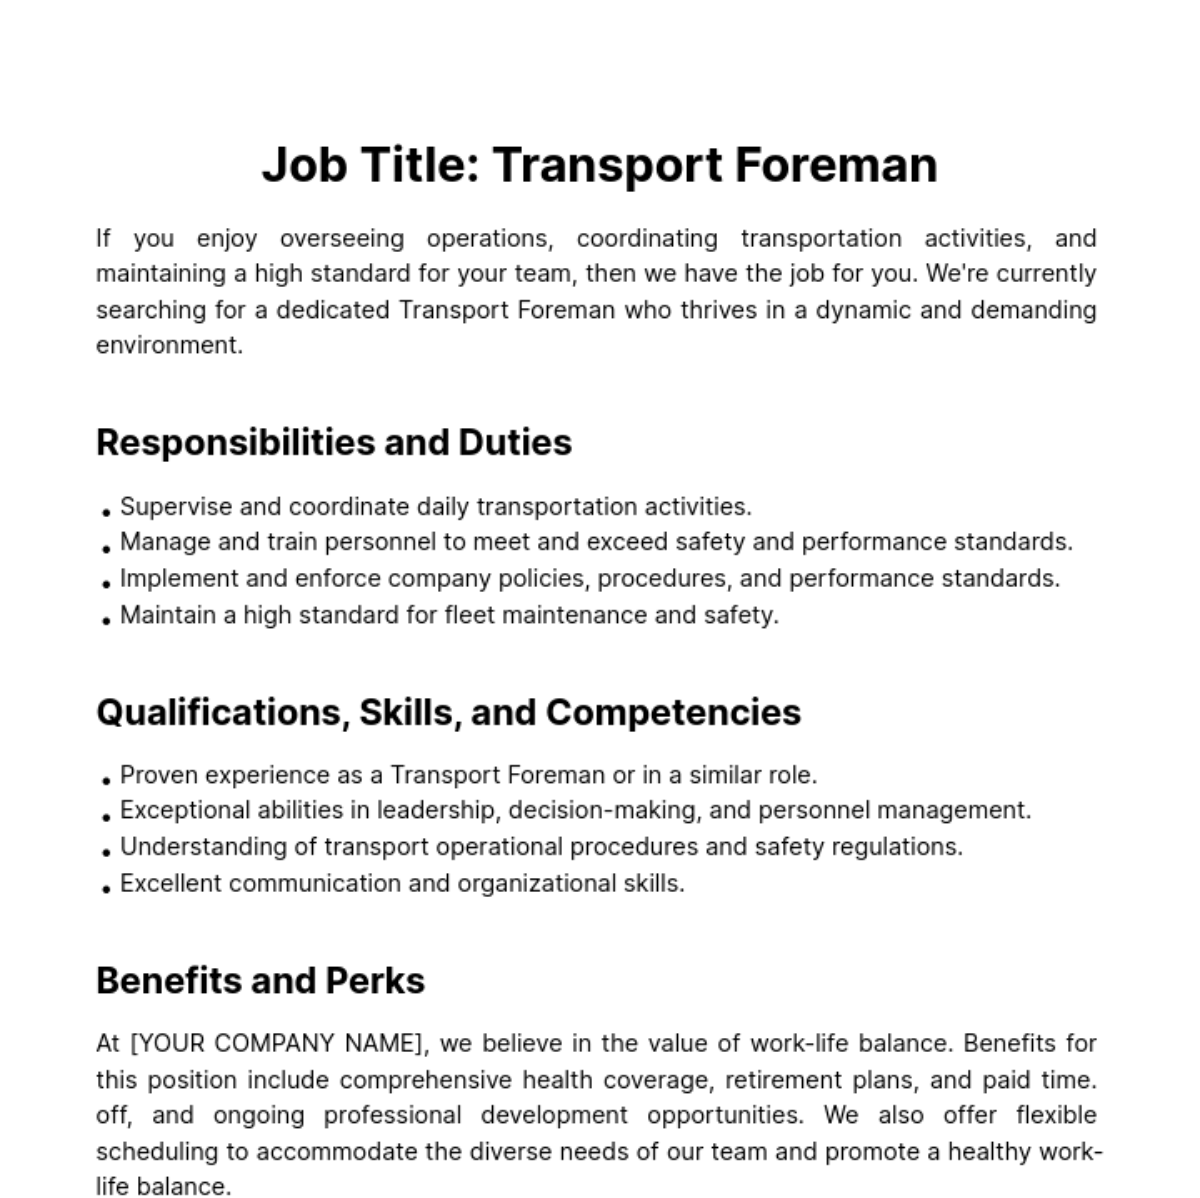 Transport Foreman Job Description Template